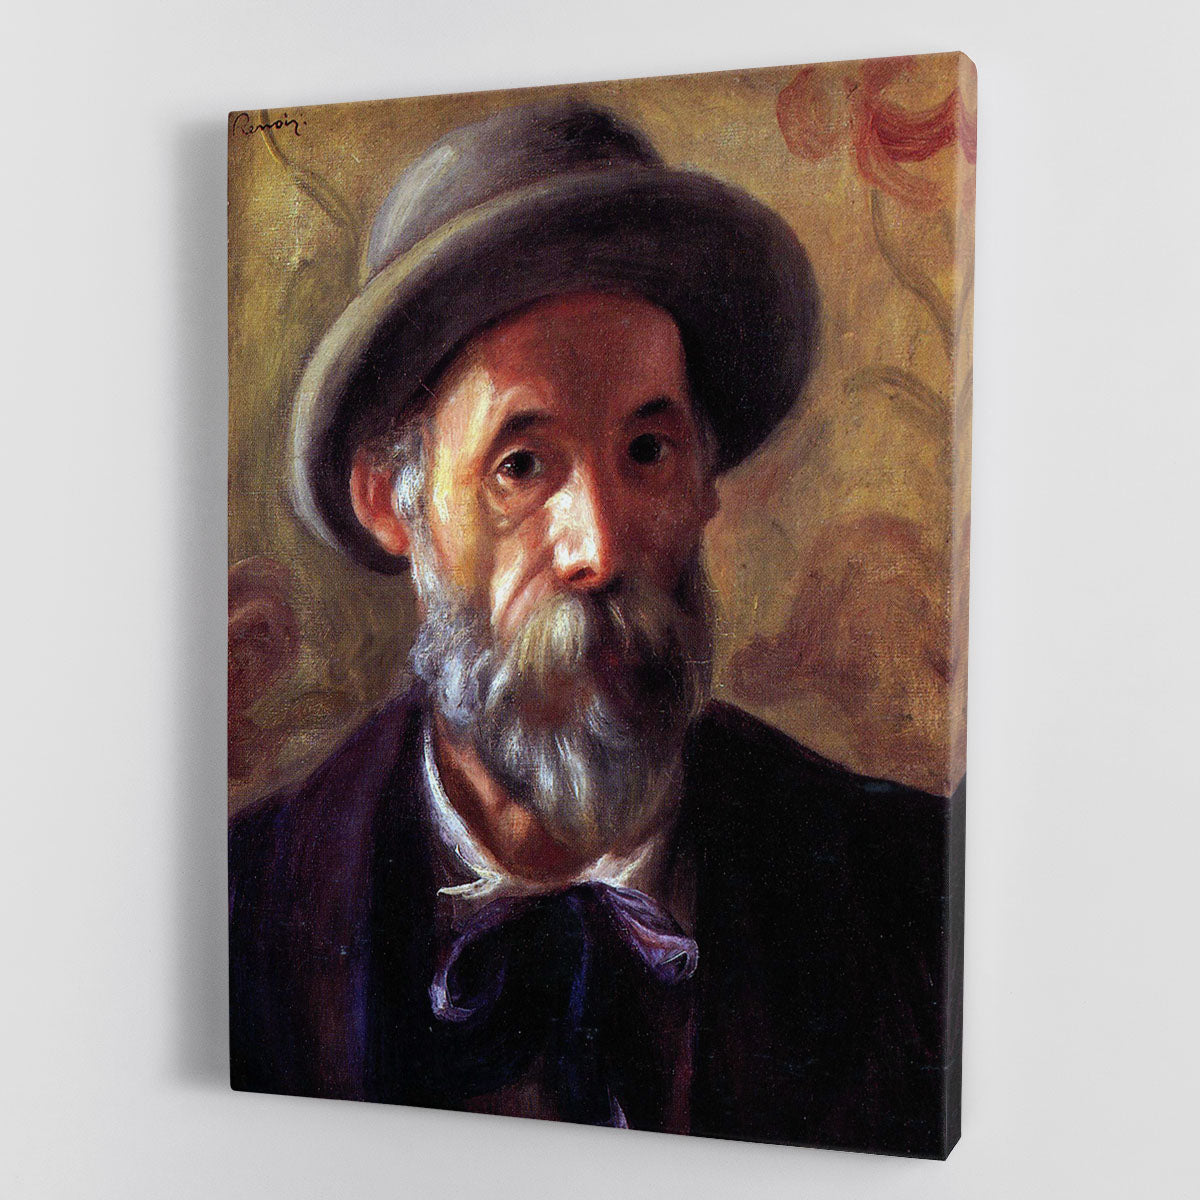 Self Portrait 1 by Renoir Canvas Print or Poster - Canvas Art Rocks - 1